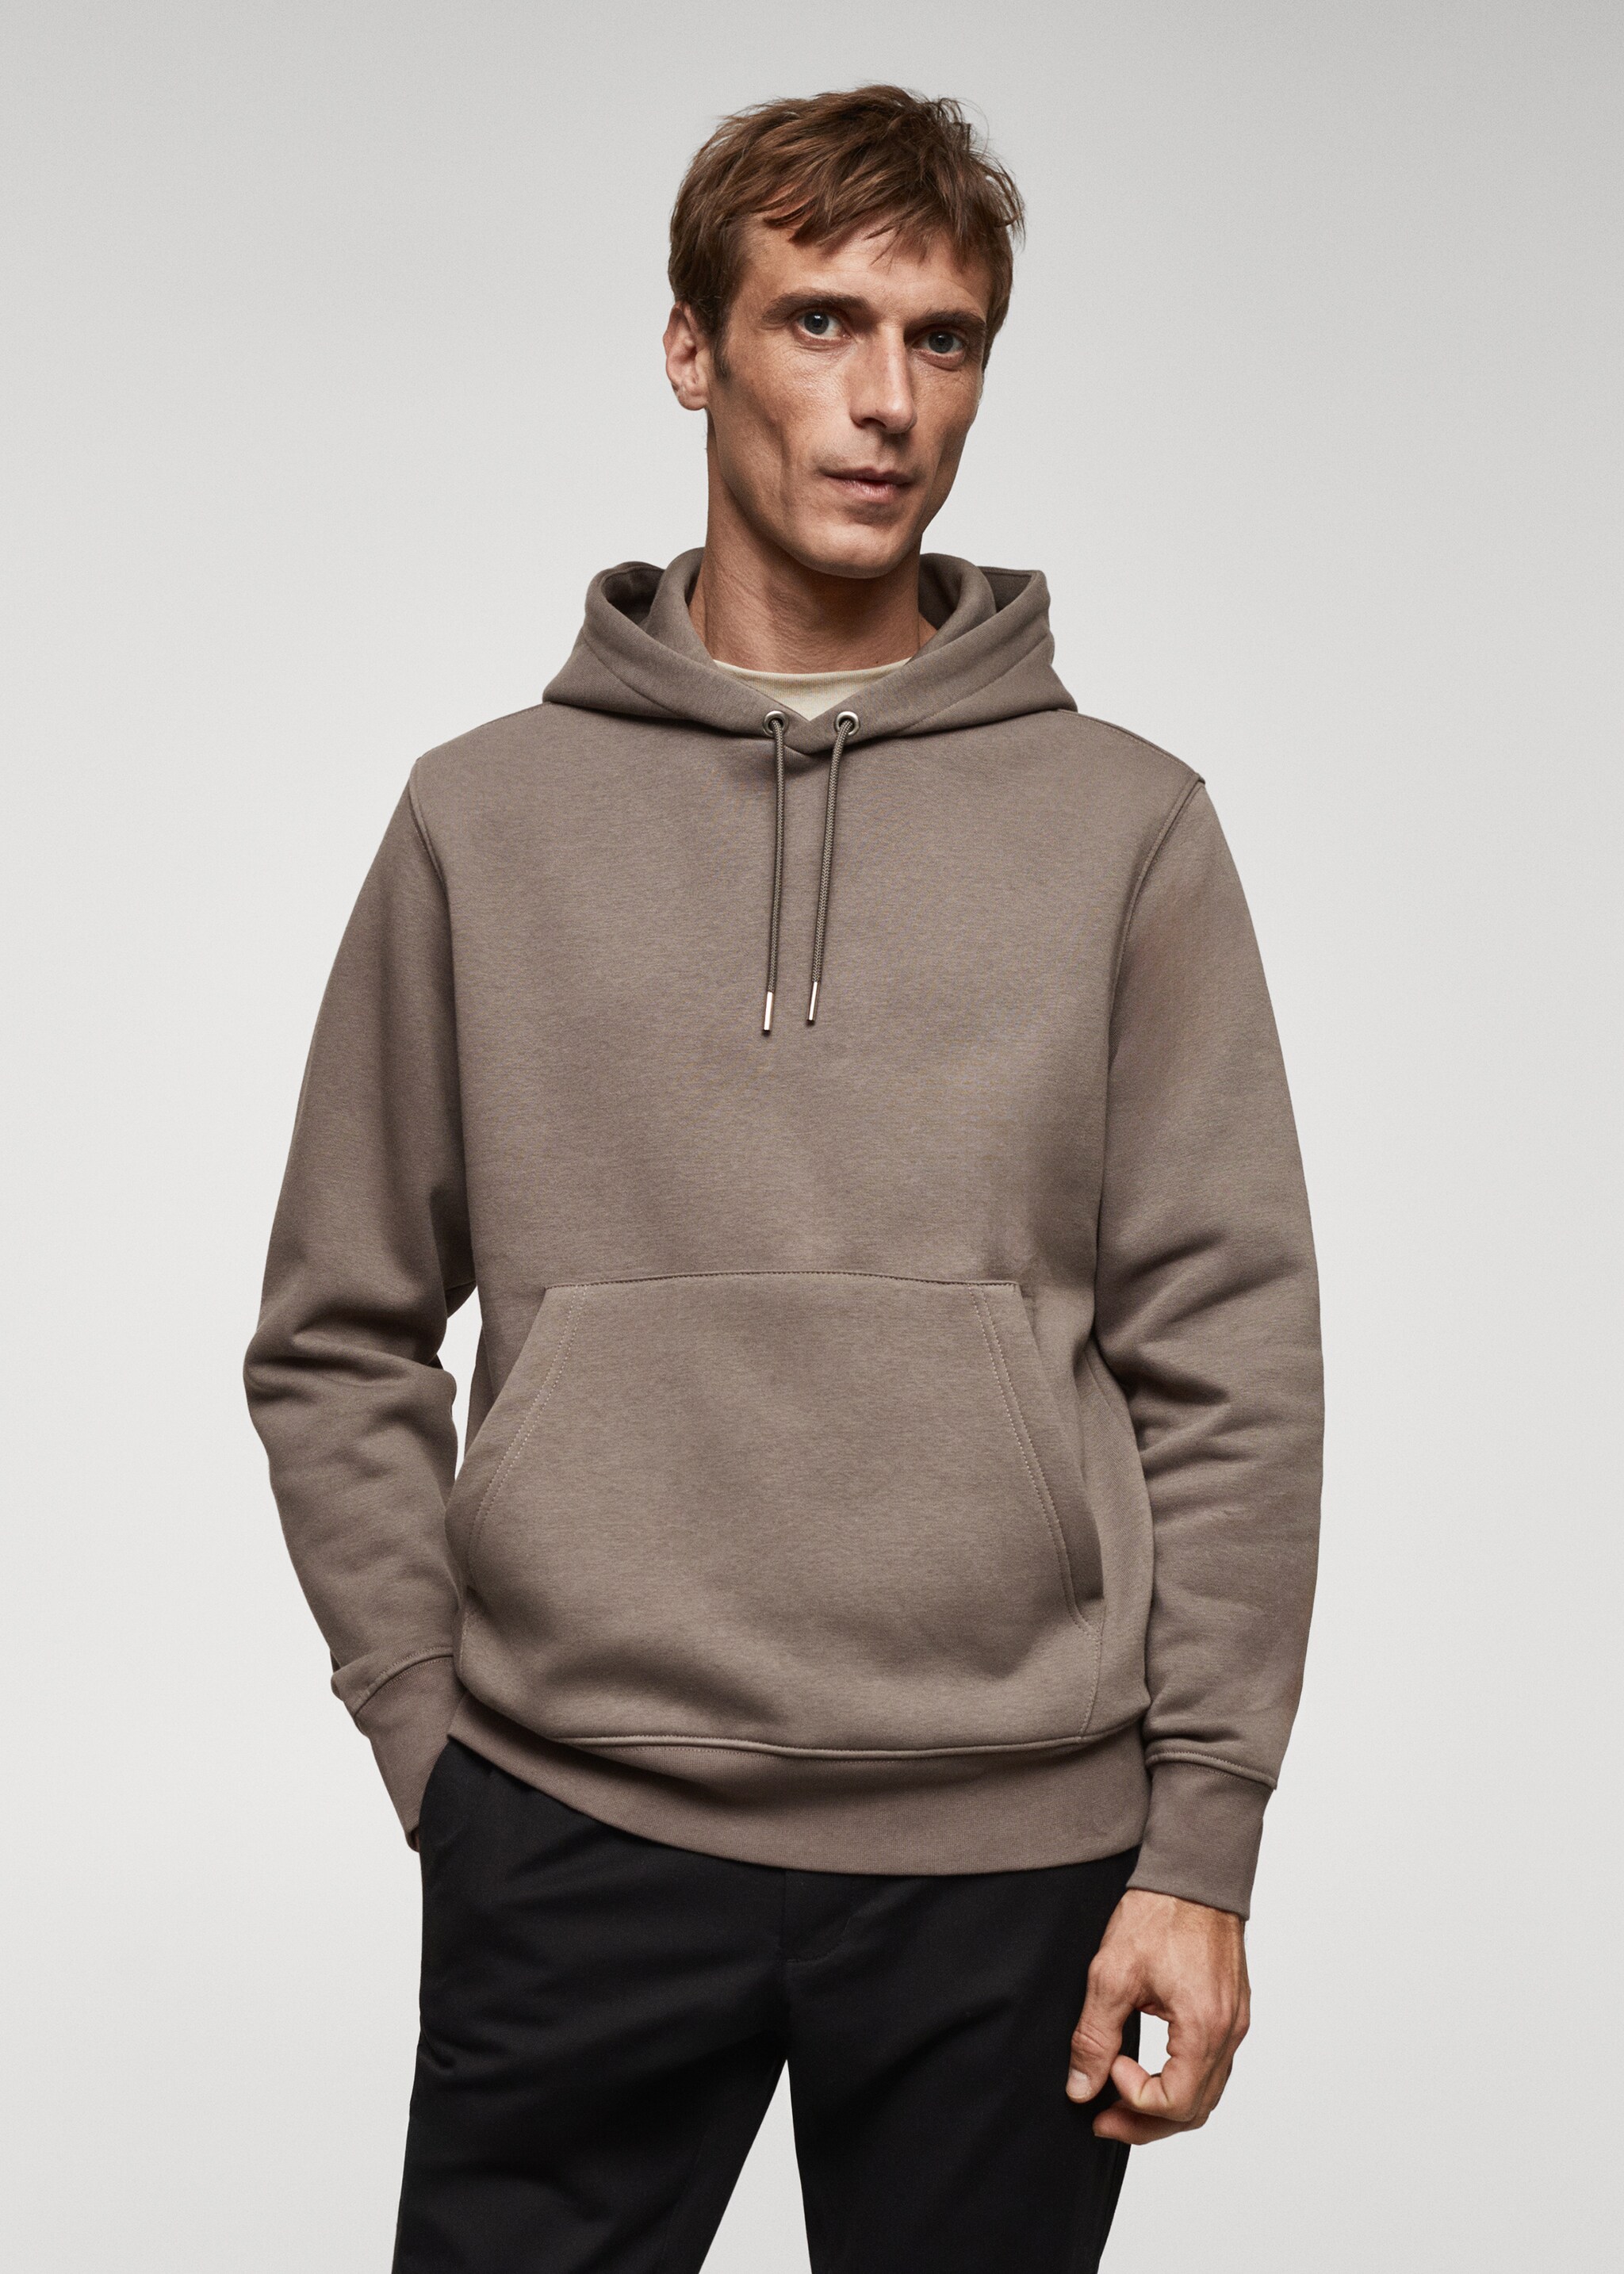 Kangaroo hooded cotton sweatshirt - Medium plane